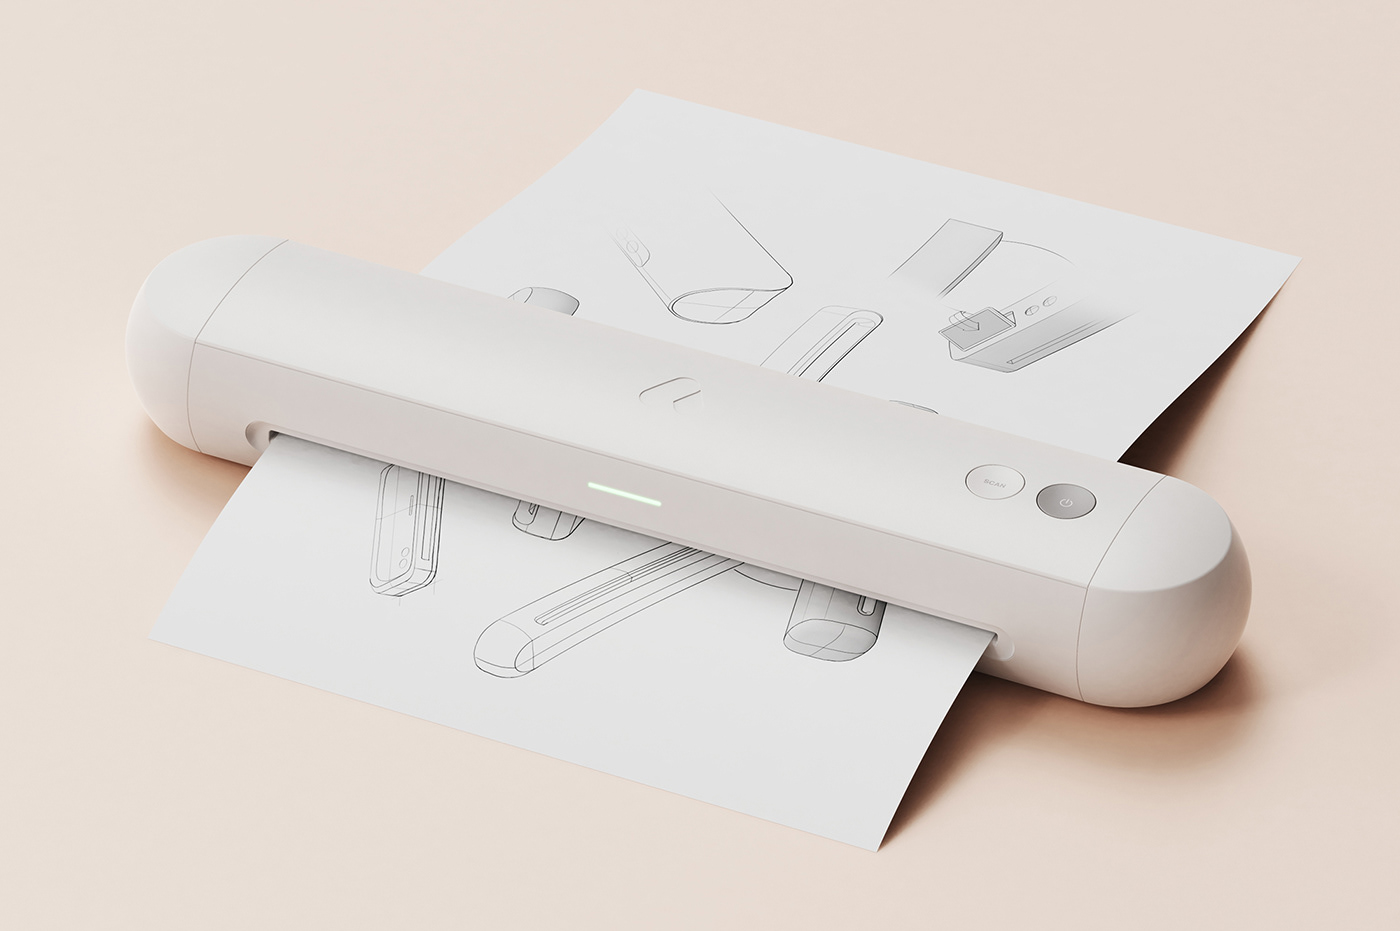 sebastian halin industrial design  product design  Portable scanner aemi go!